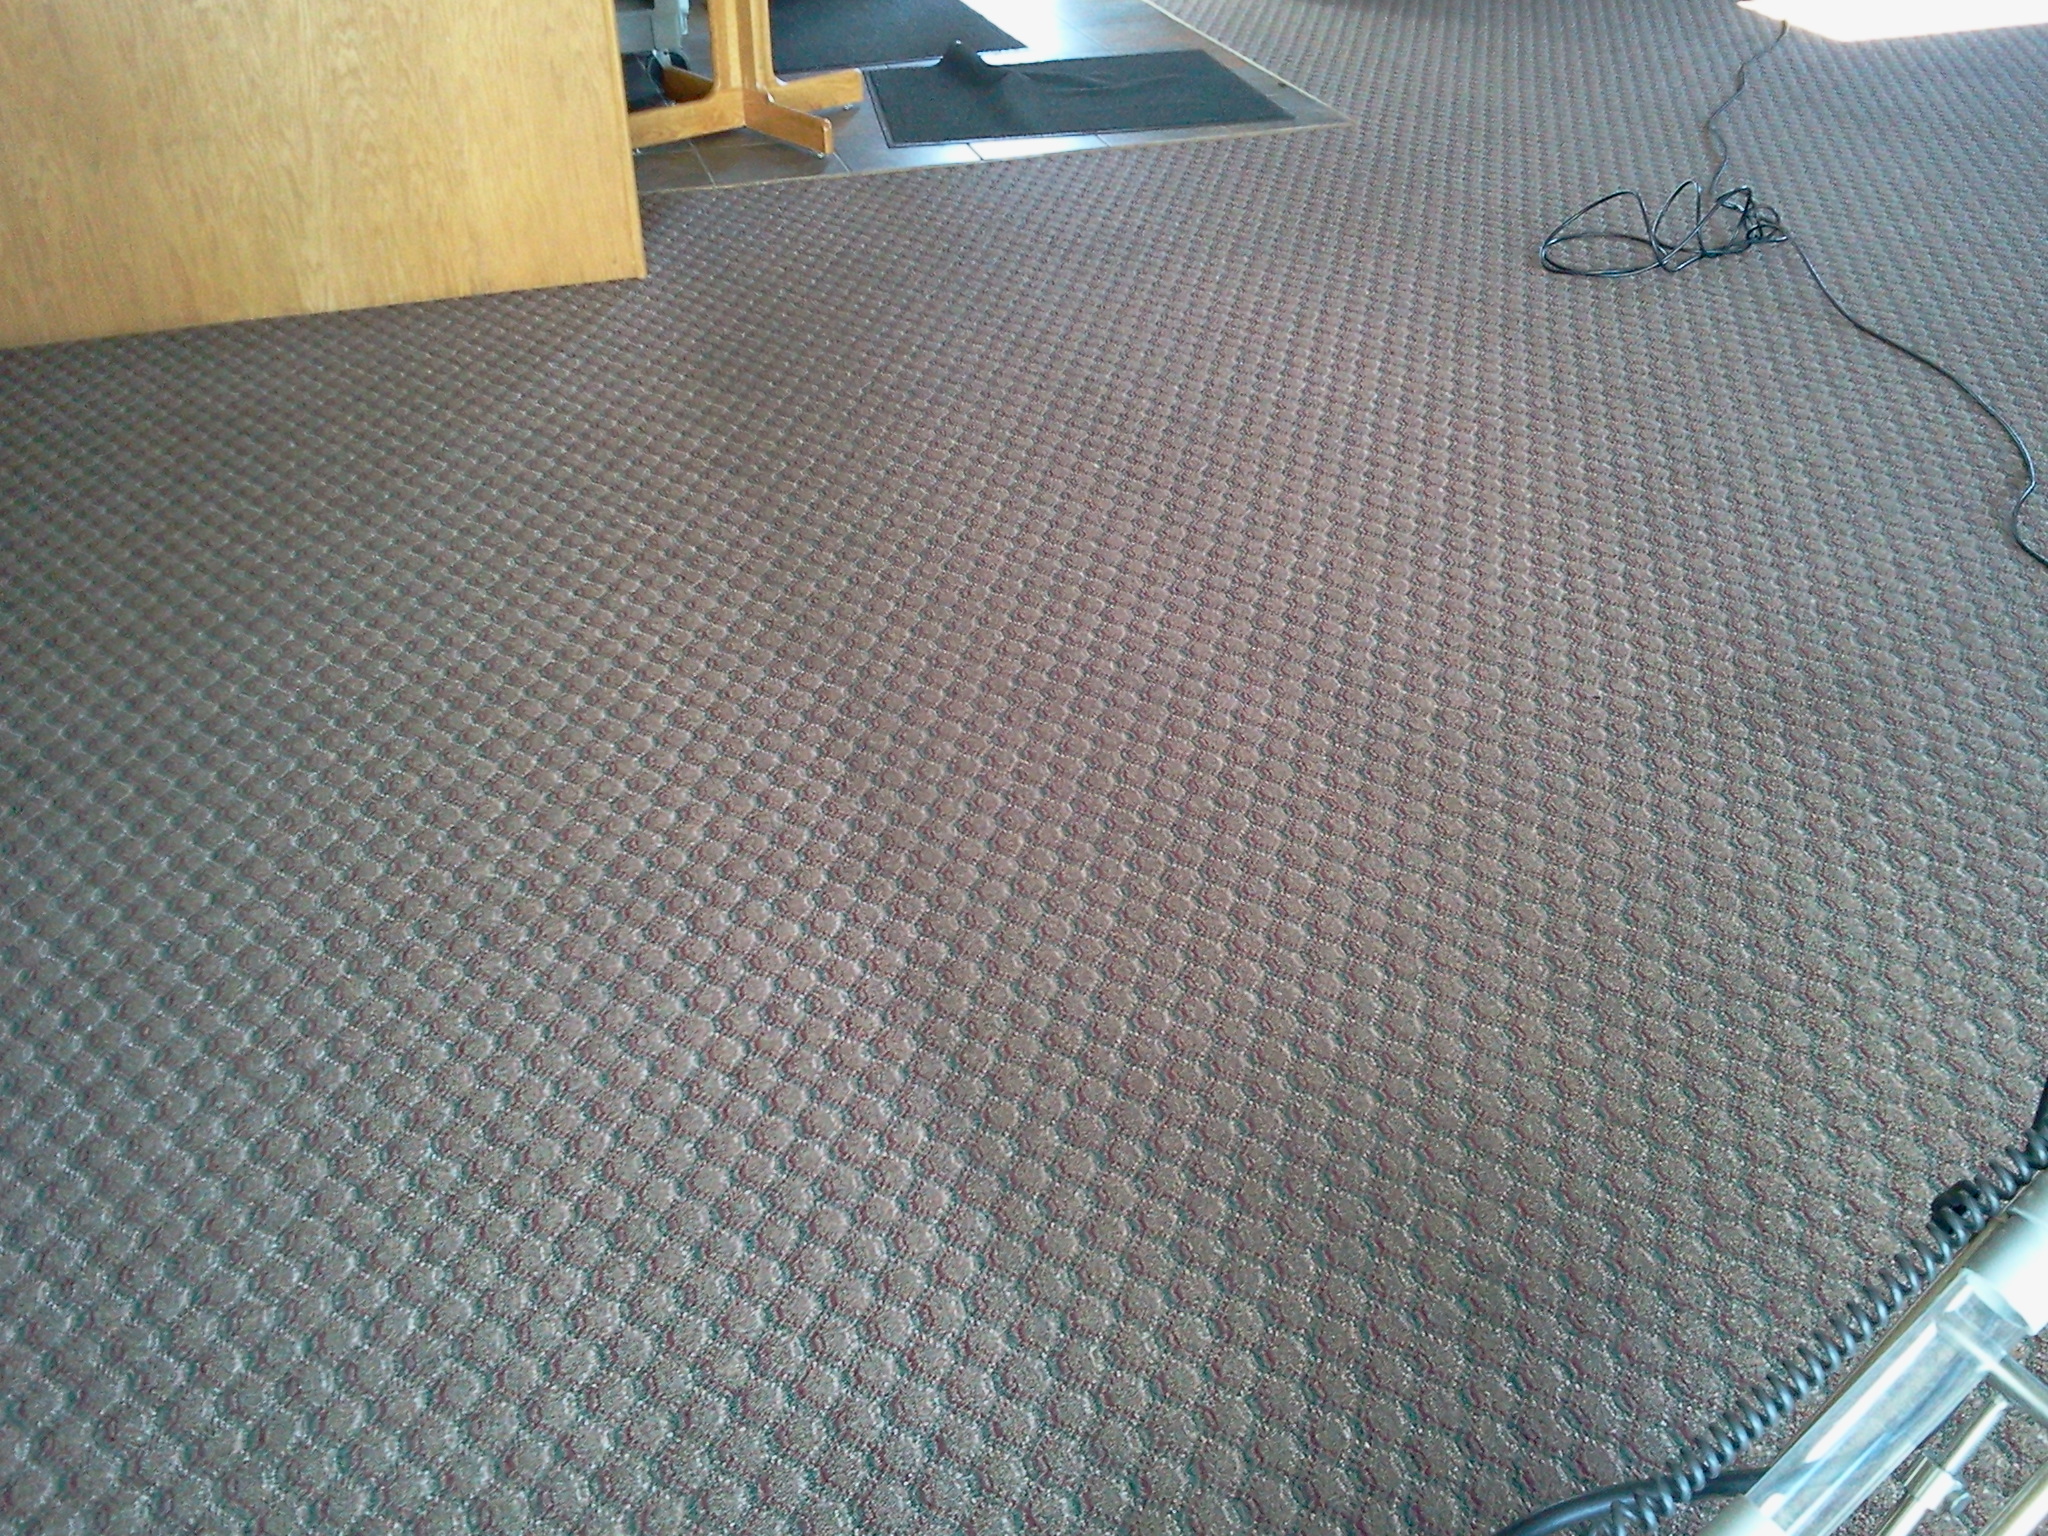 Church Carpet Cleaning